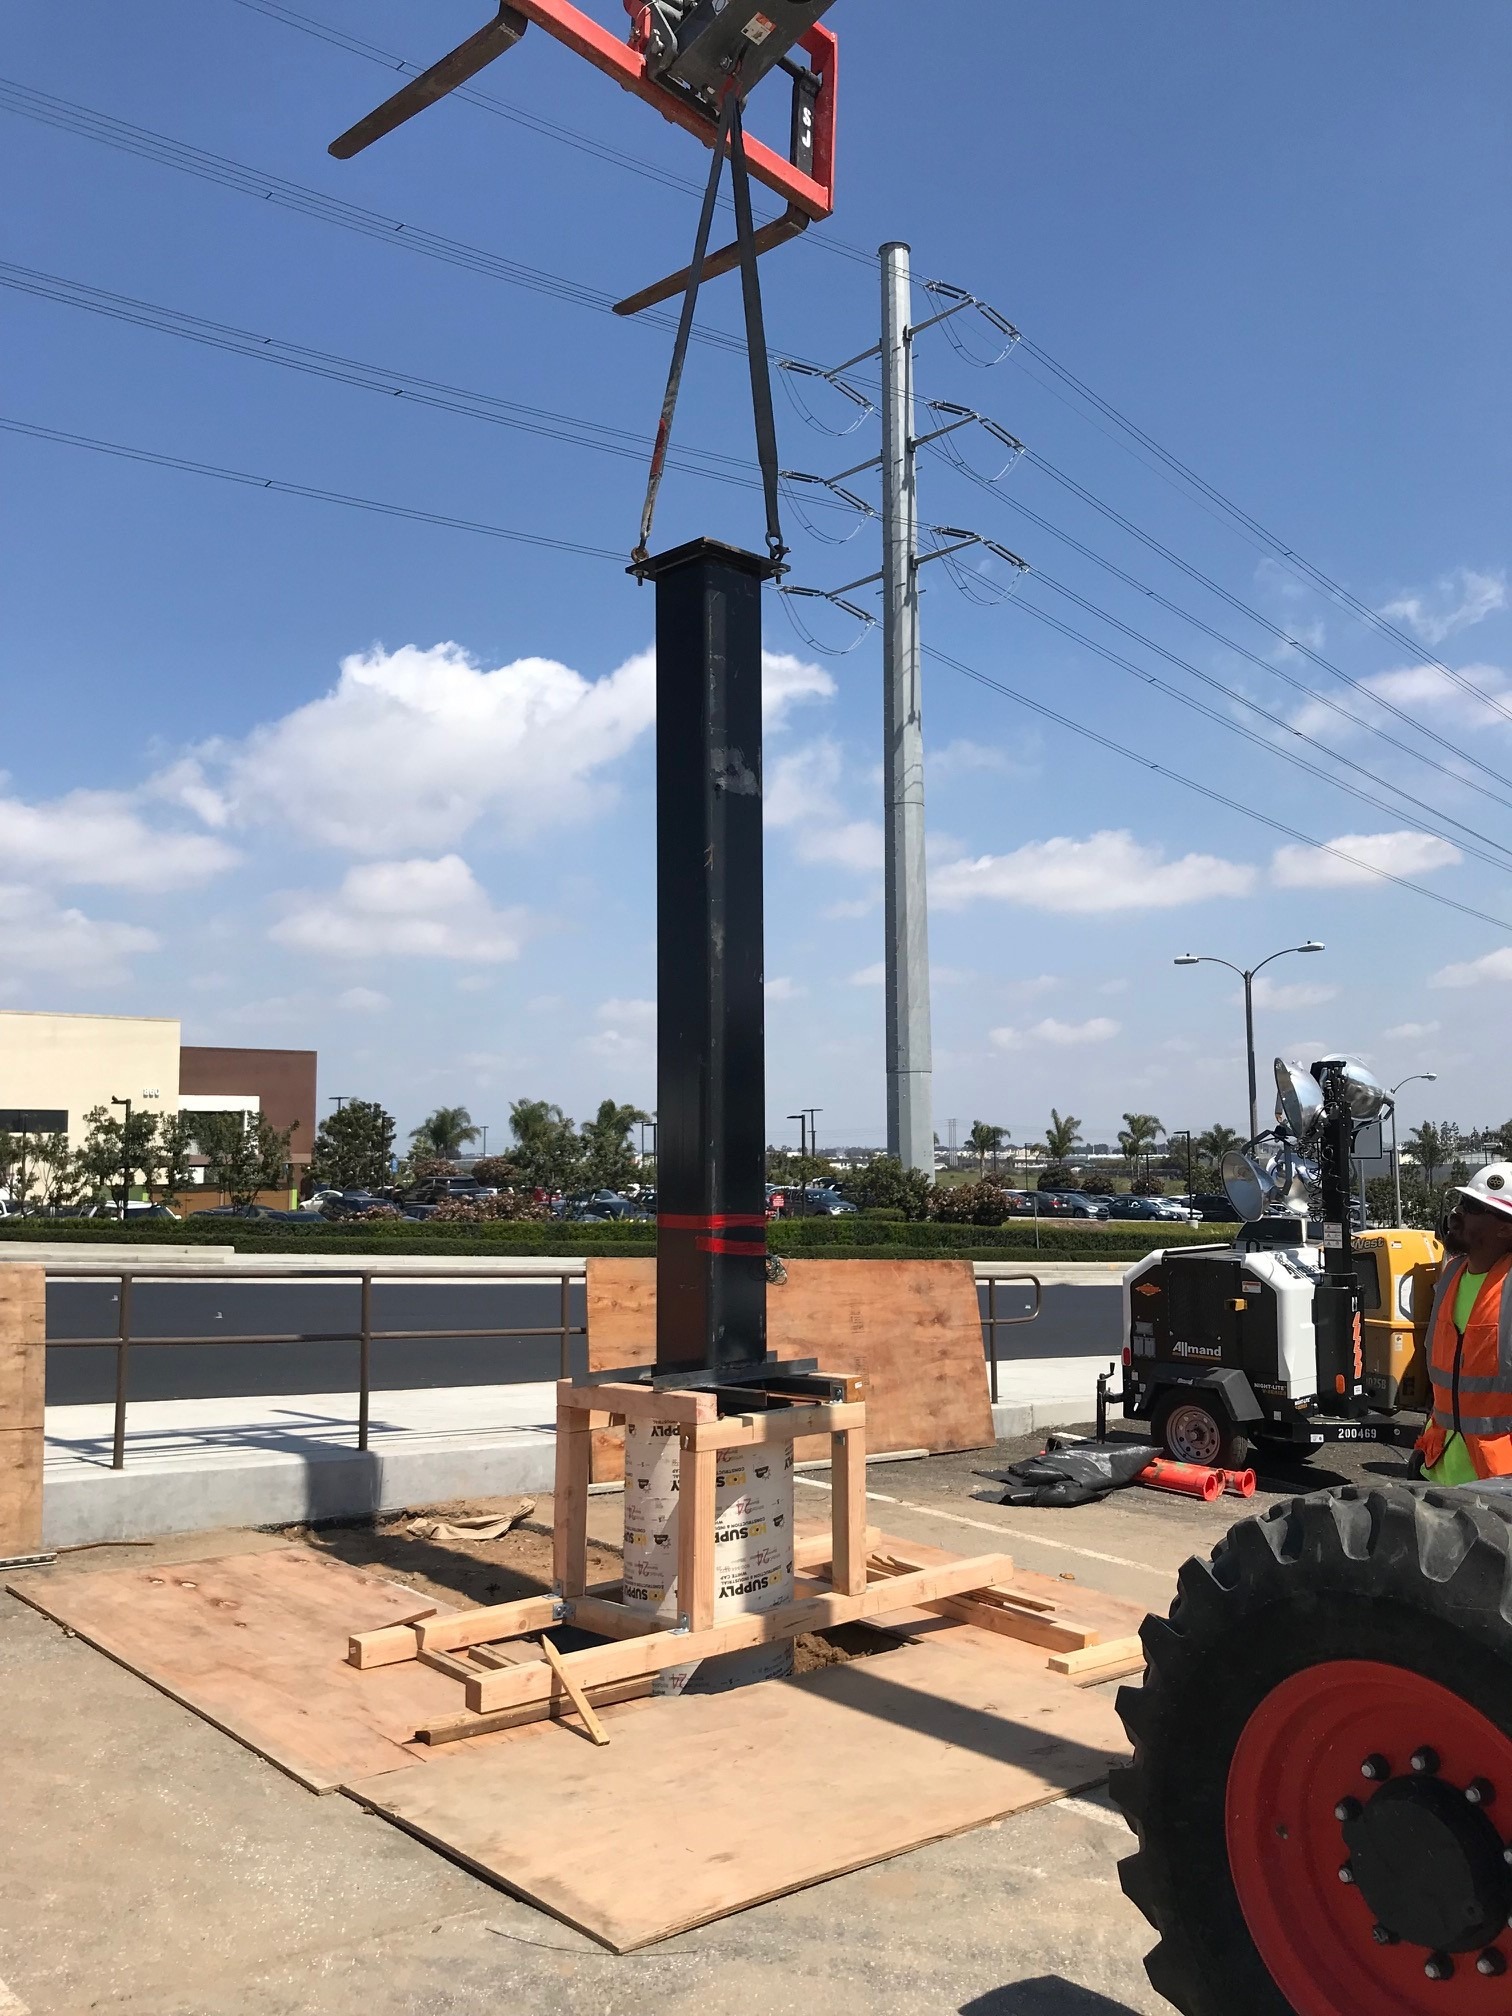 We set a new pole